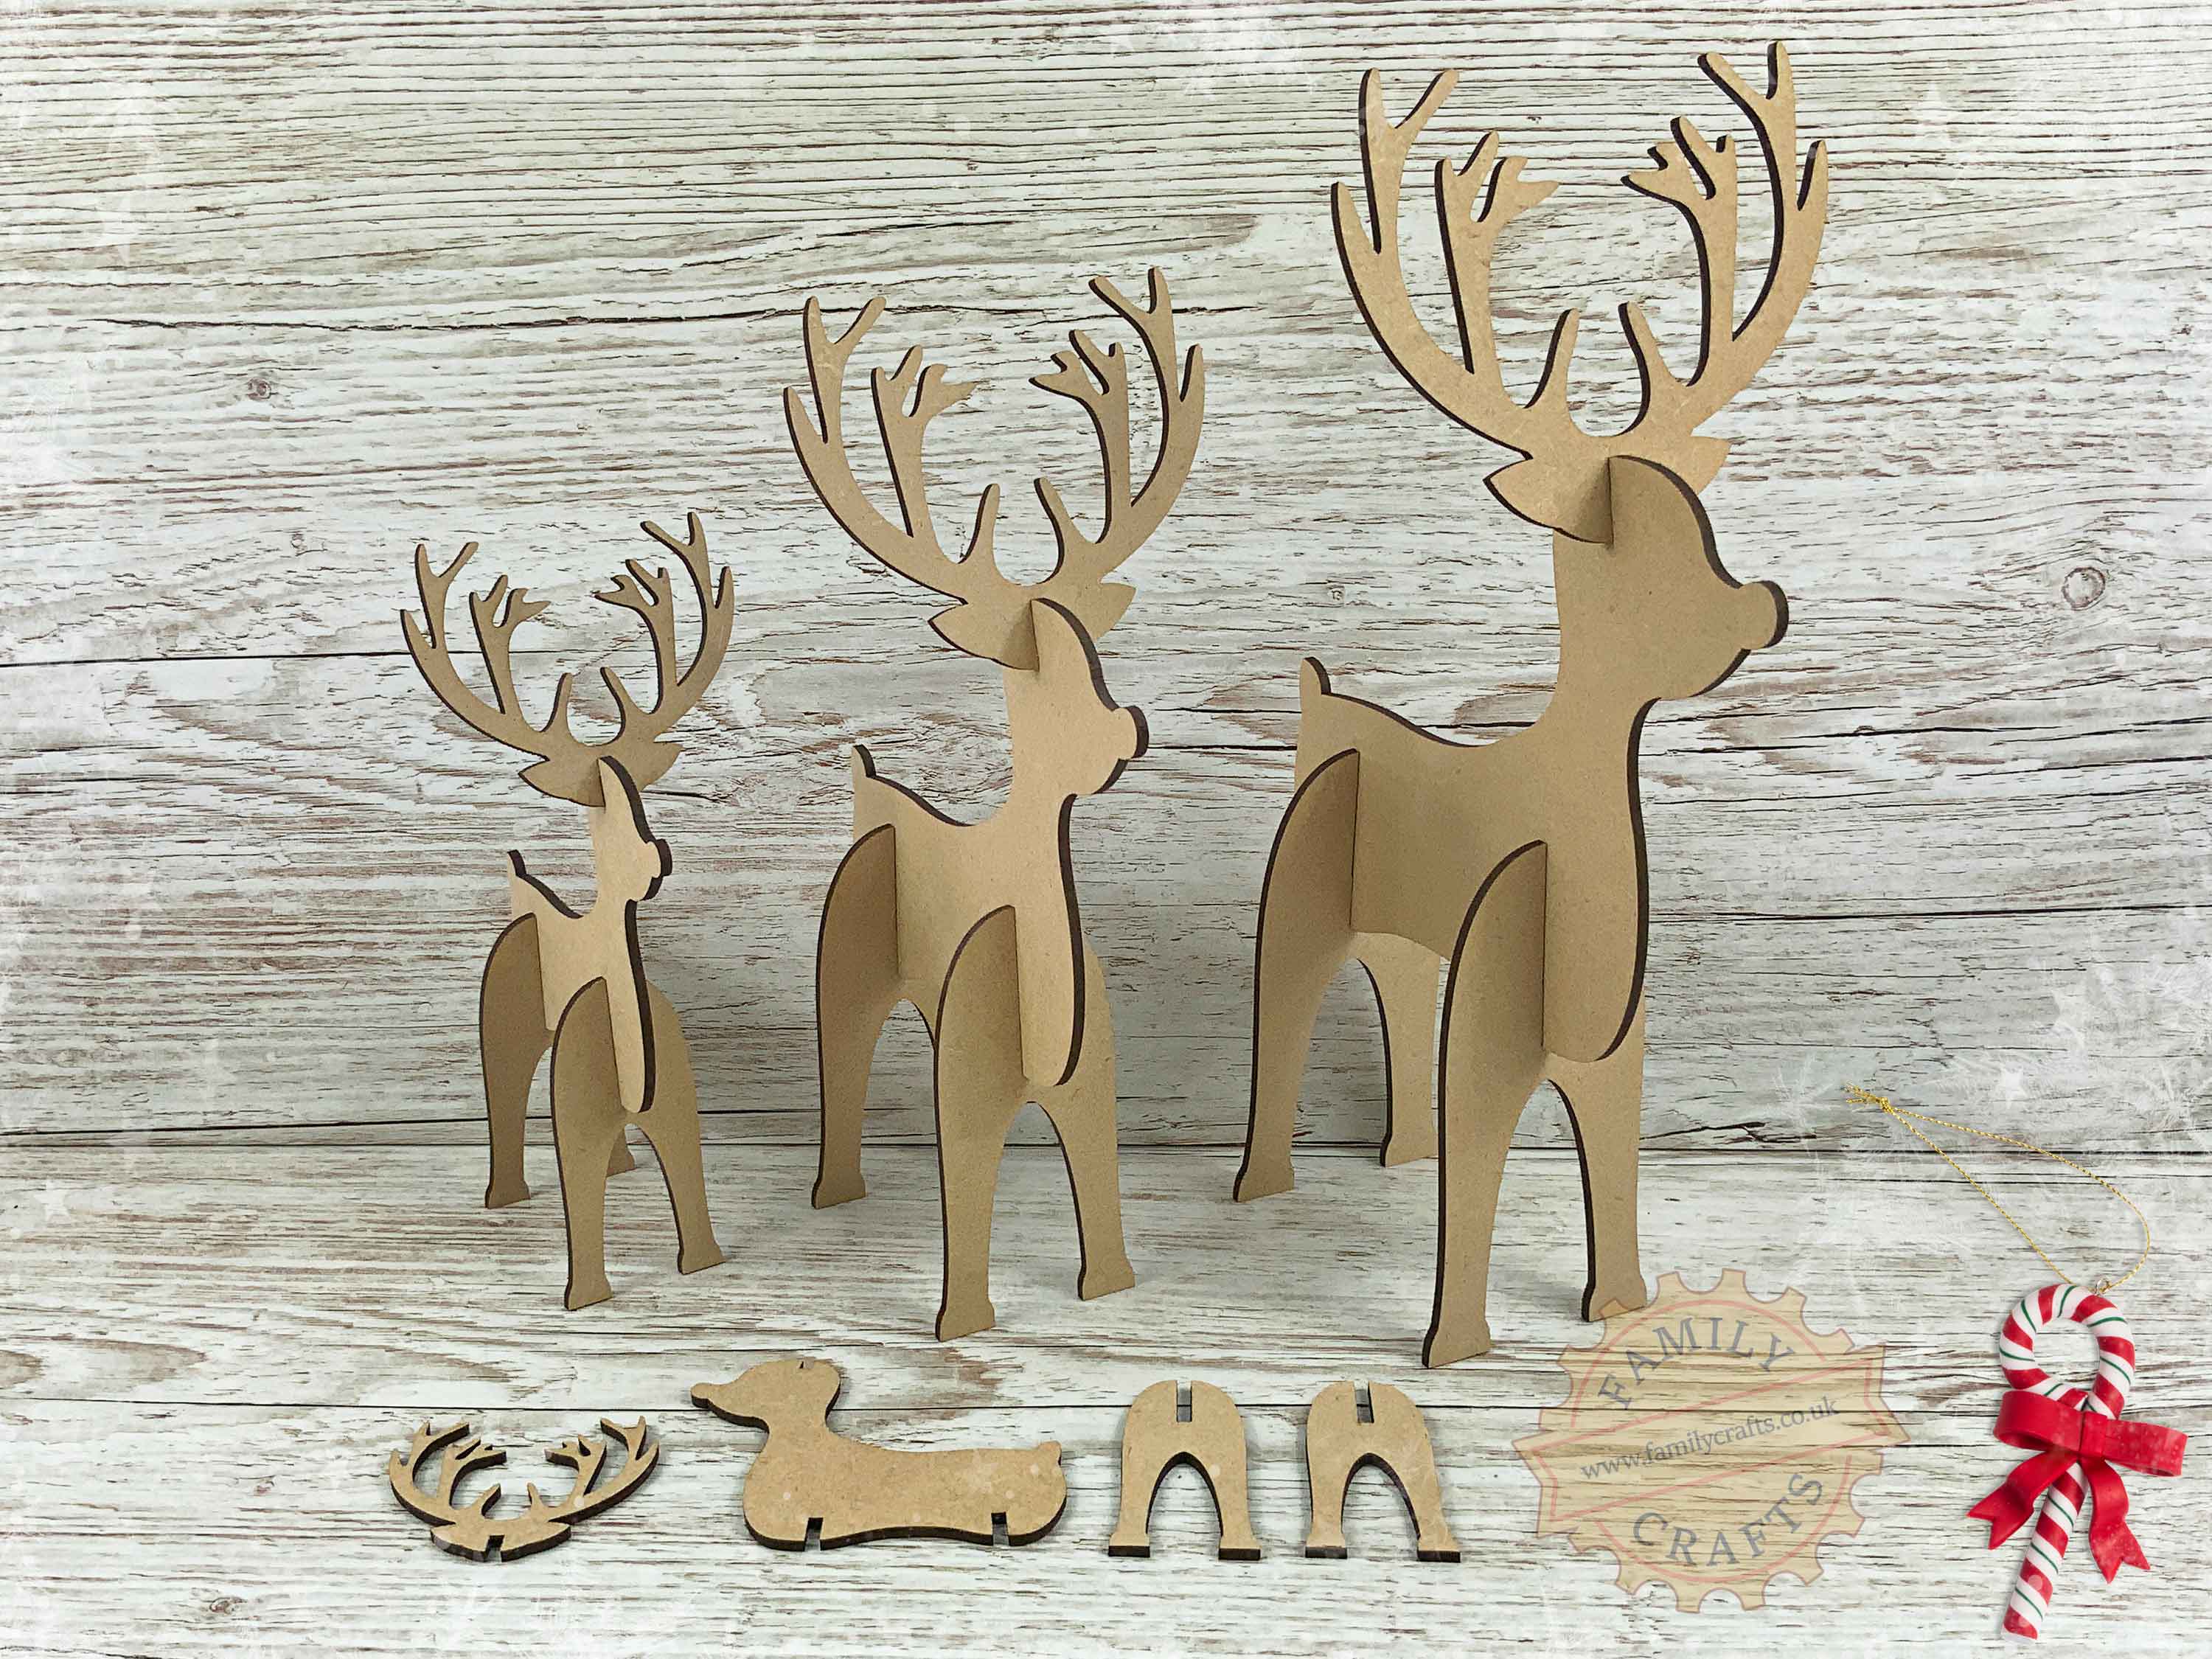 Handcrafted Reindeer Figure Ornaments